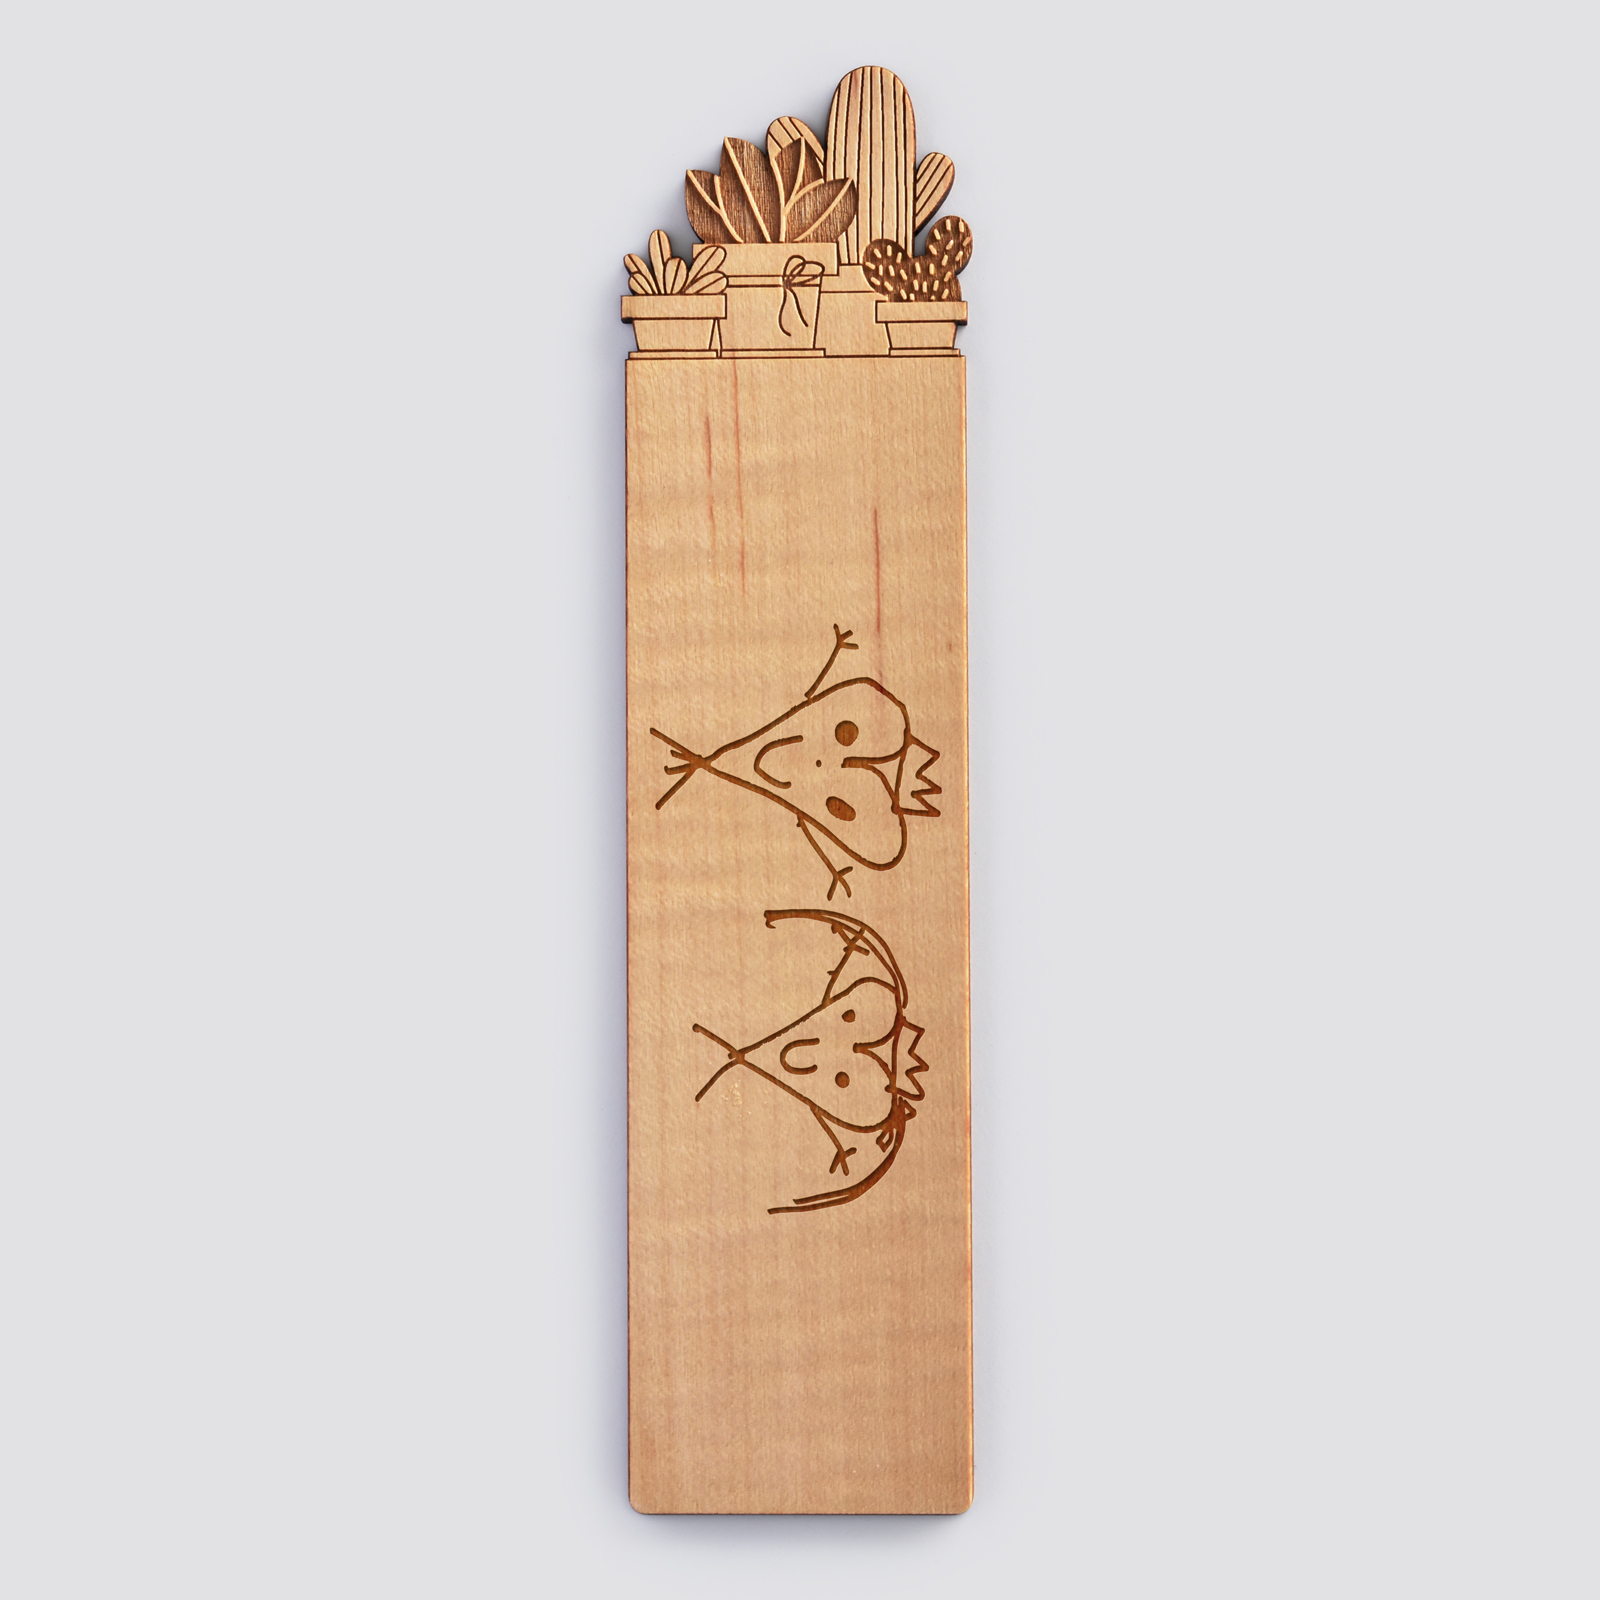 Personalised "Cactus" engraved wooden bookmark - sketch